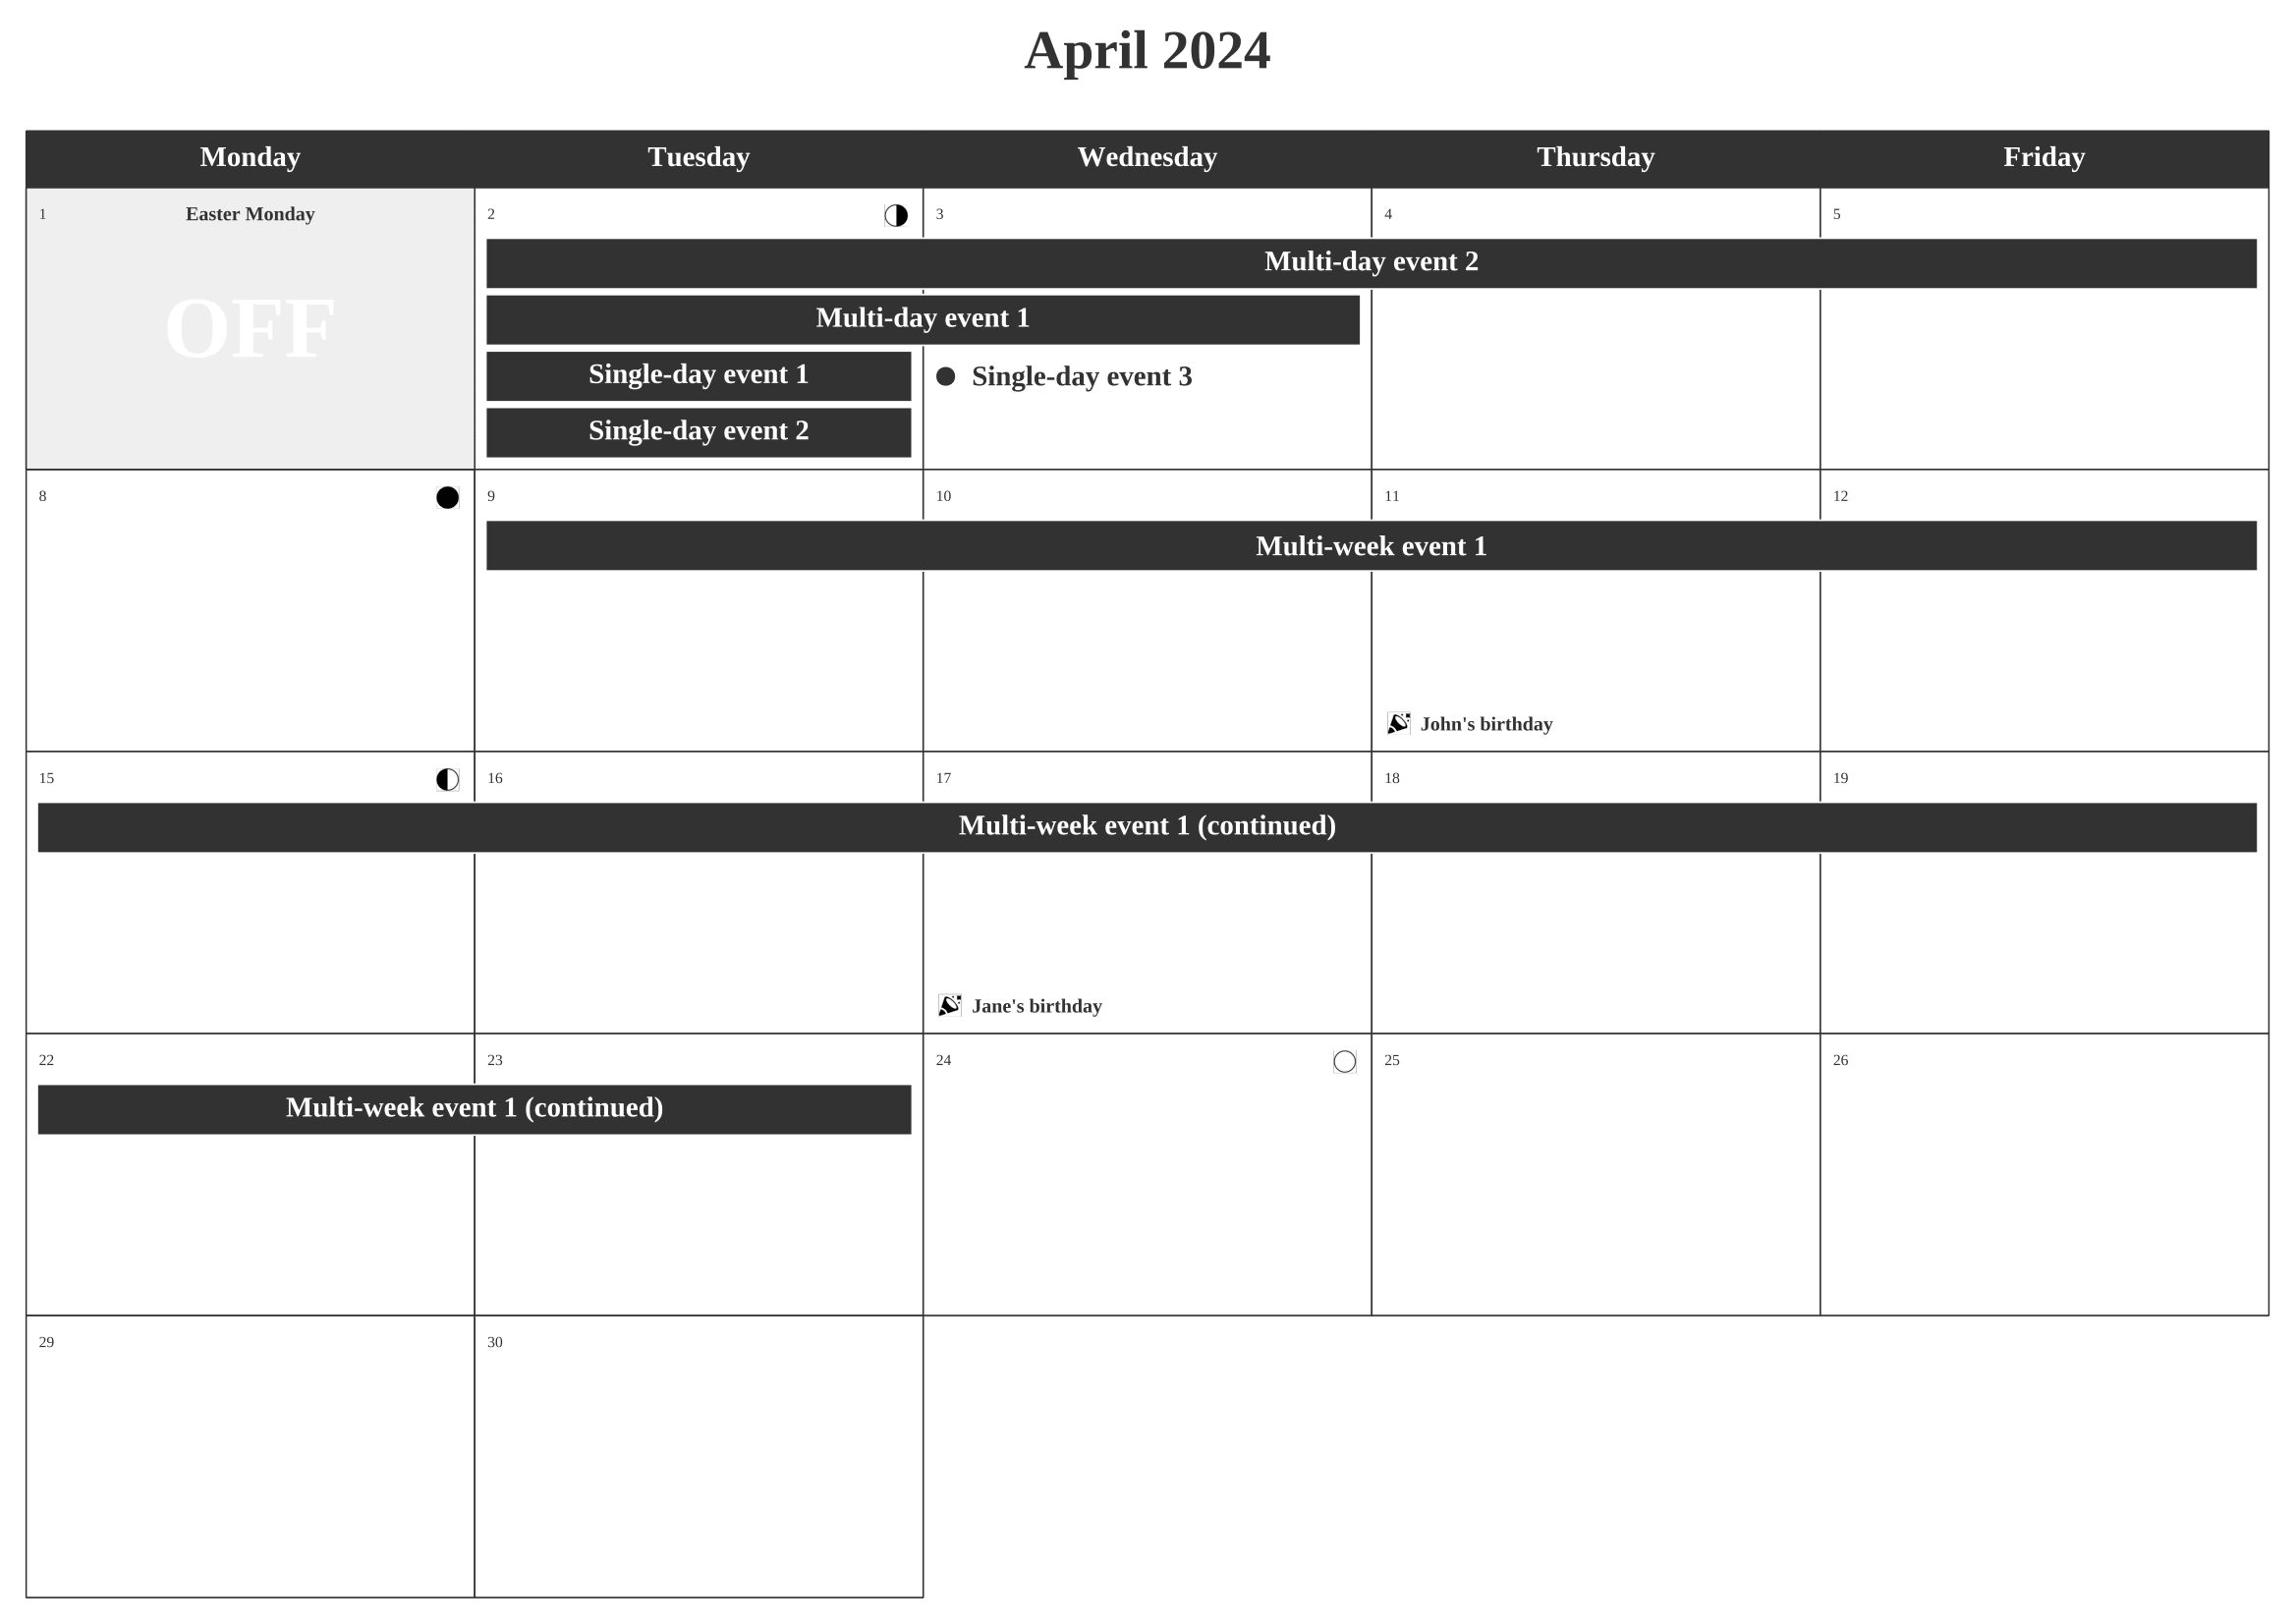 Monthly calendar - Multi-week events